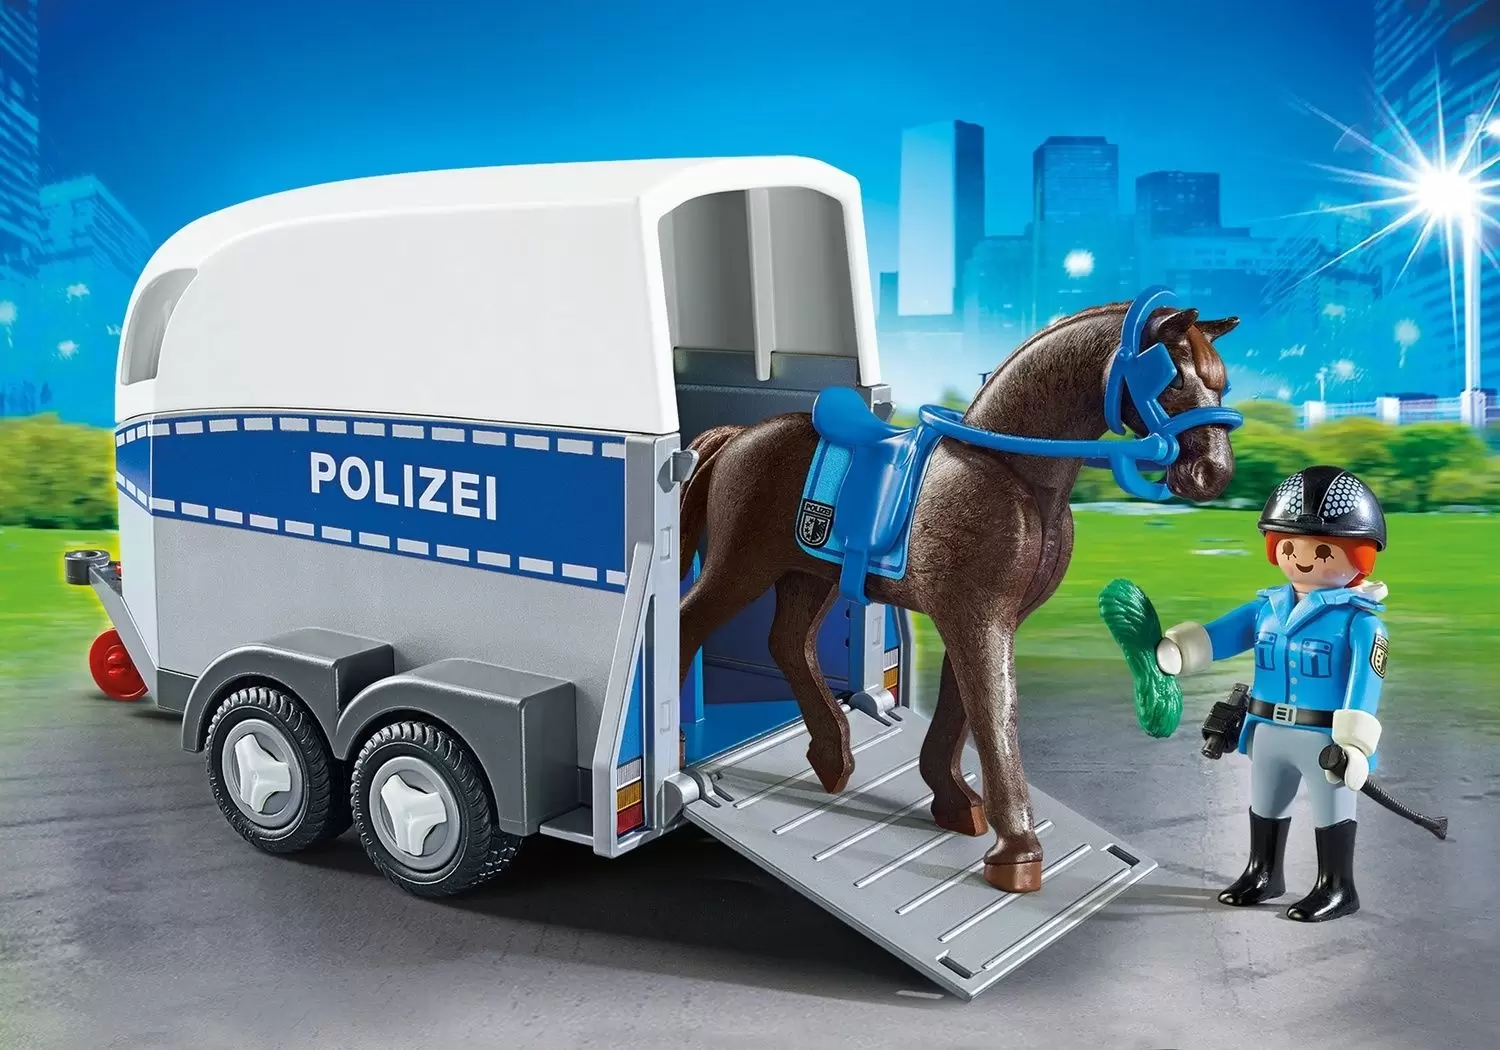 Playmobil Policier - Van et Police montée (Polizei)